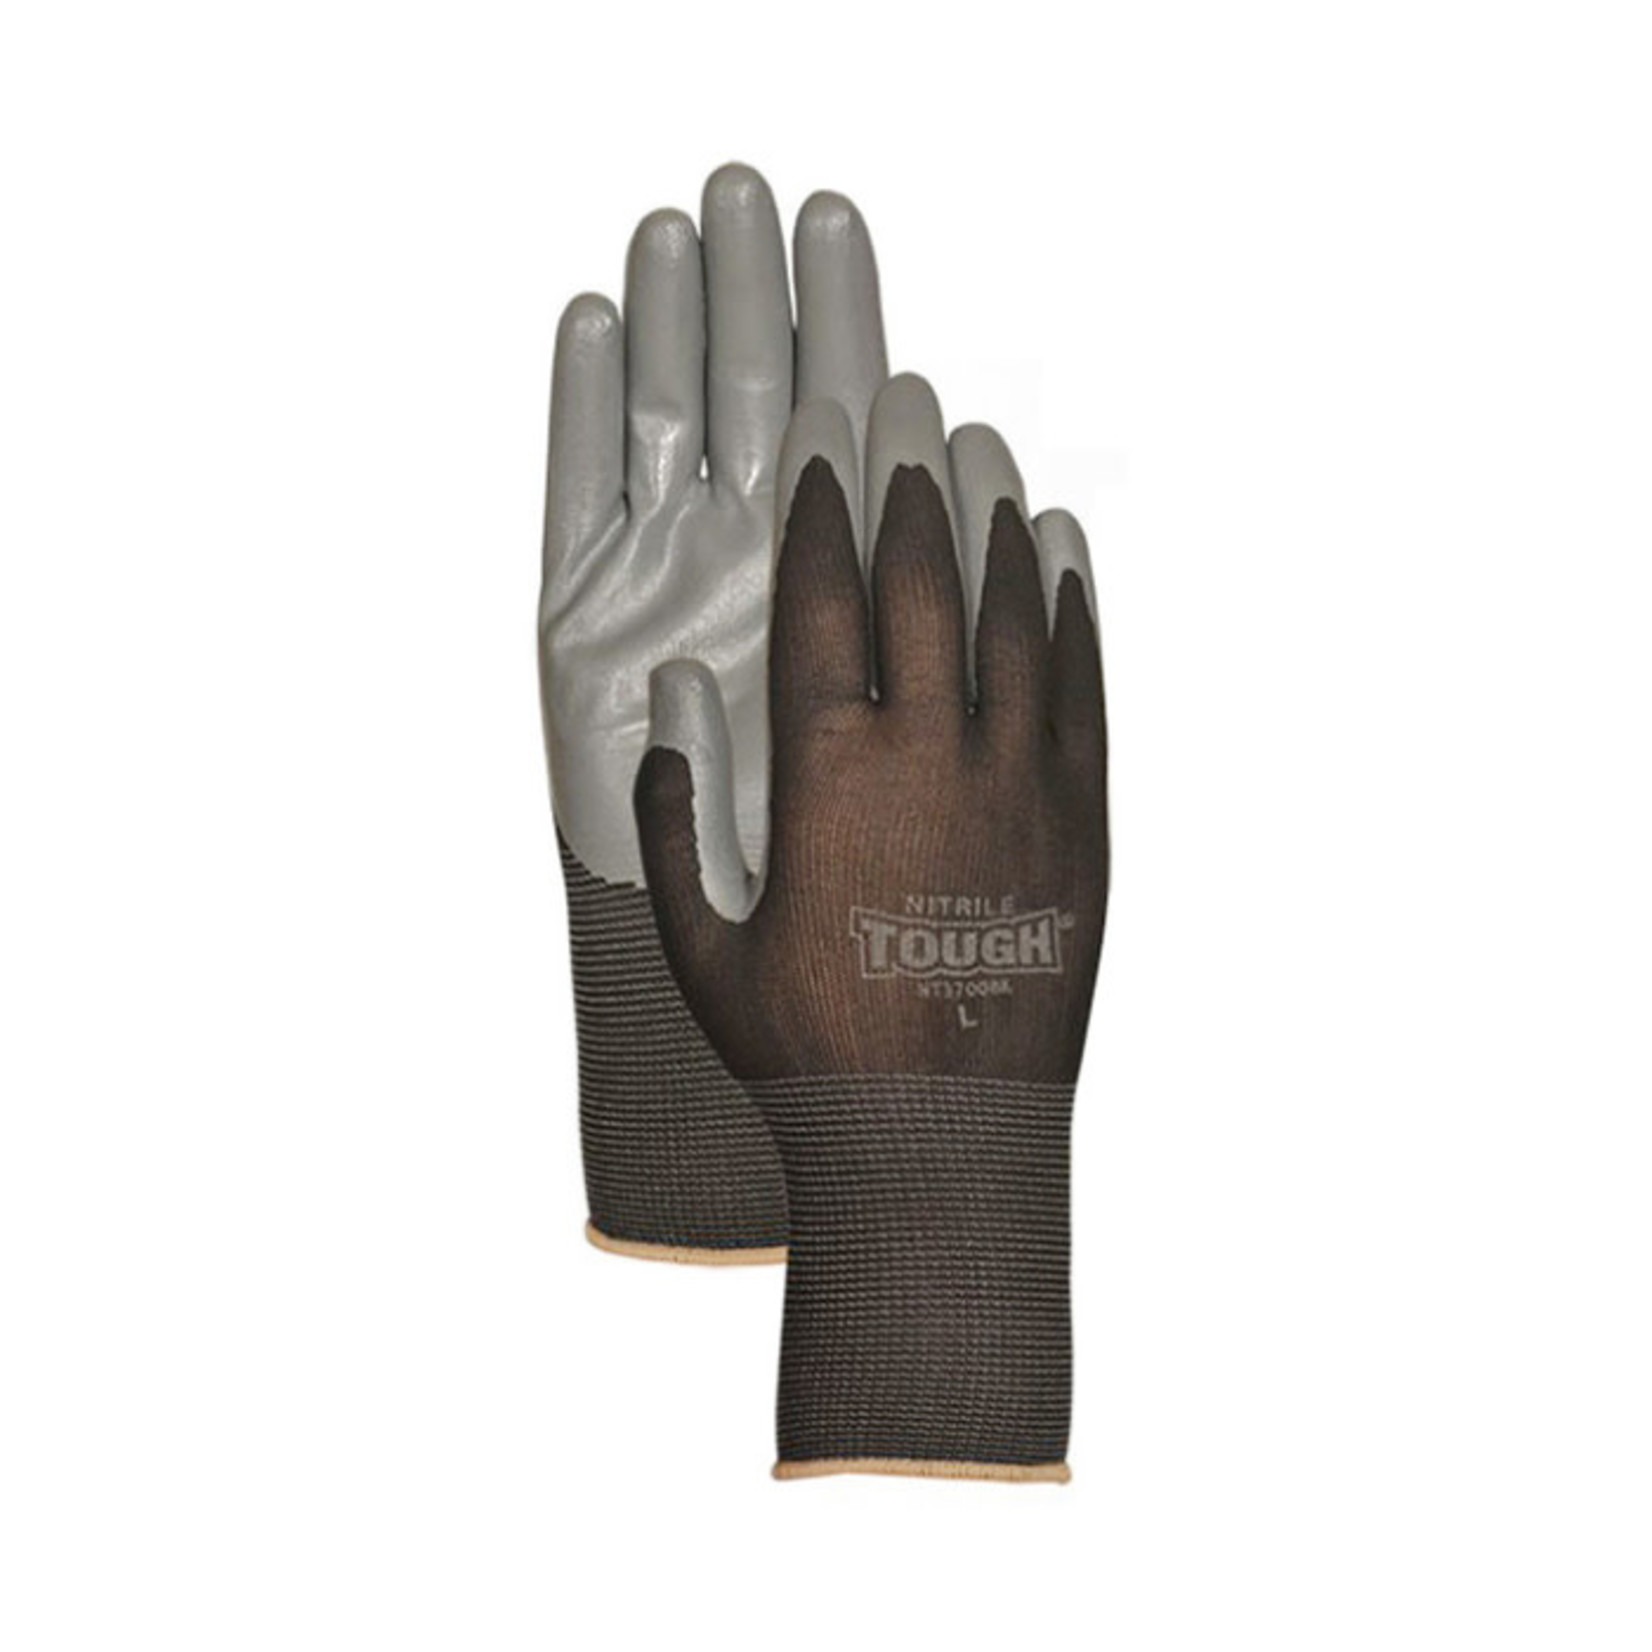 BGC Nitrile Tough Black Gloves